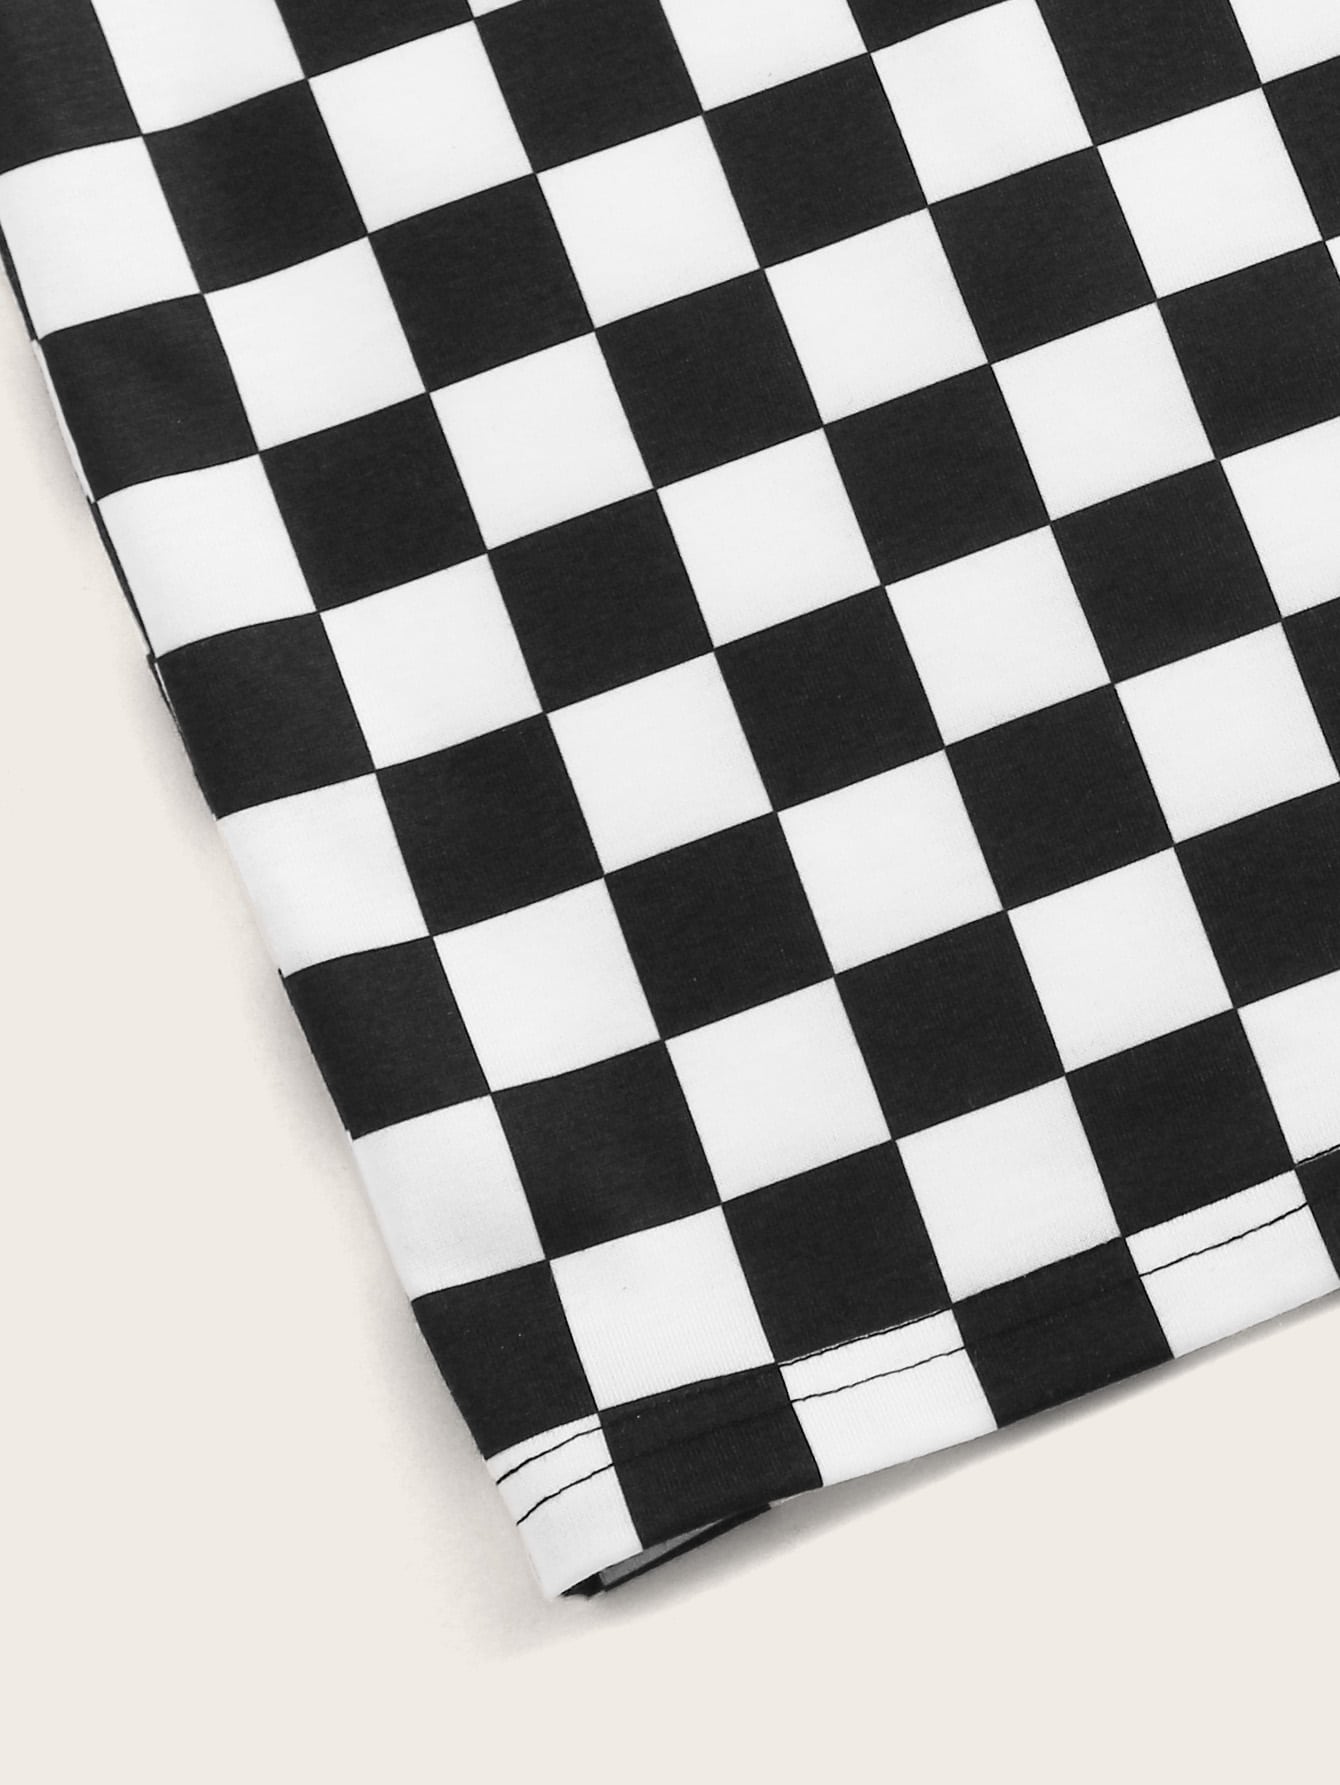 Drawstring Waist Checkered Skirt